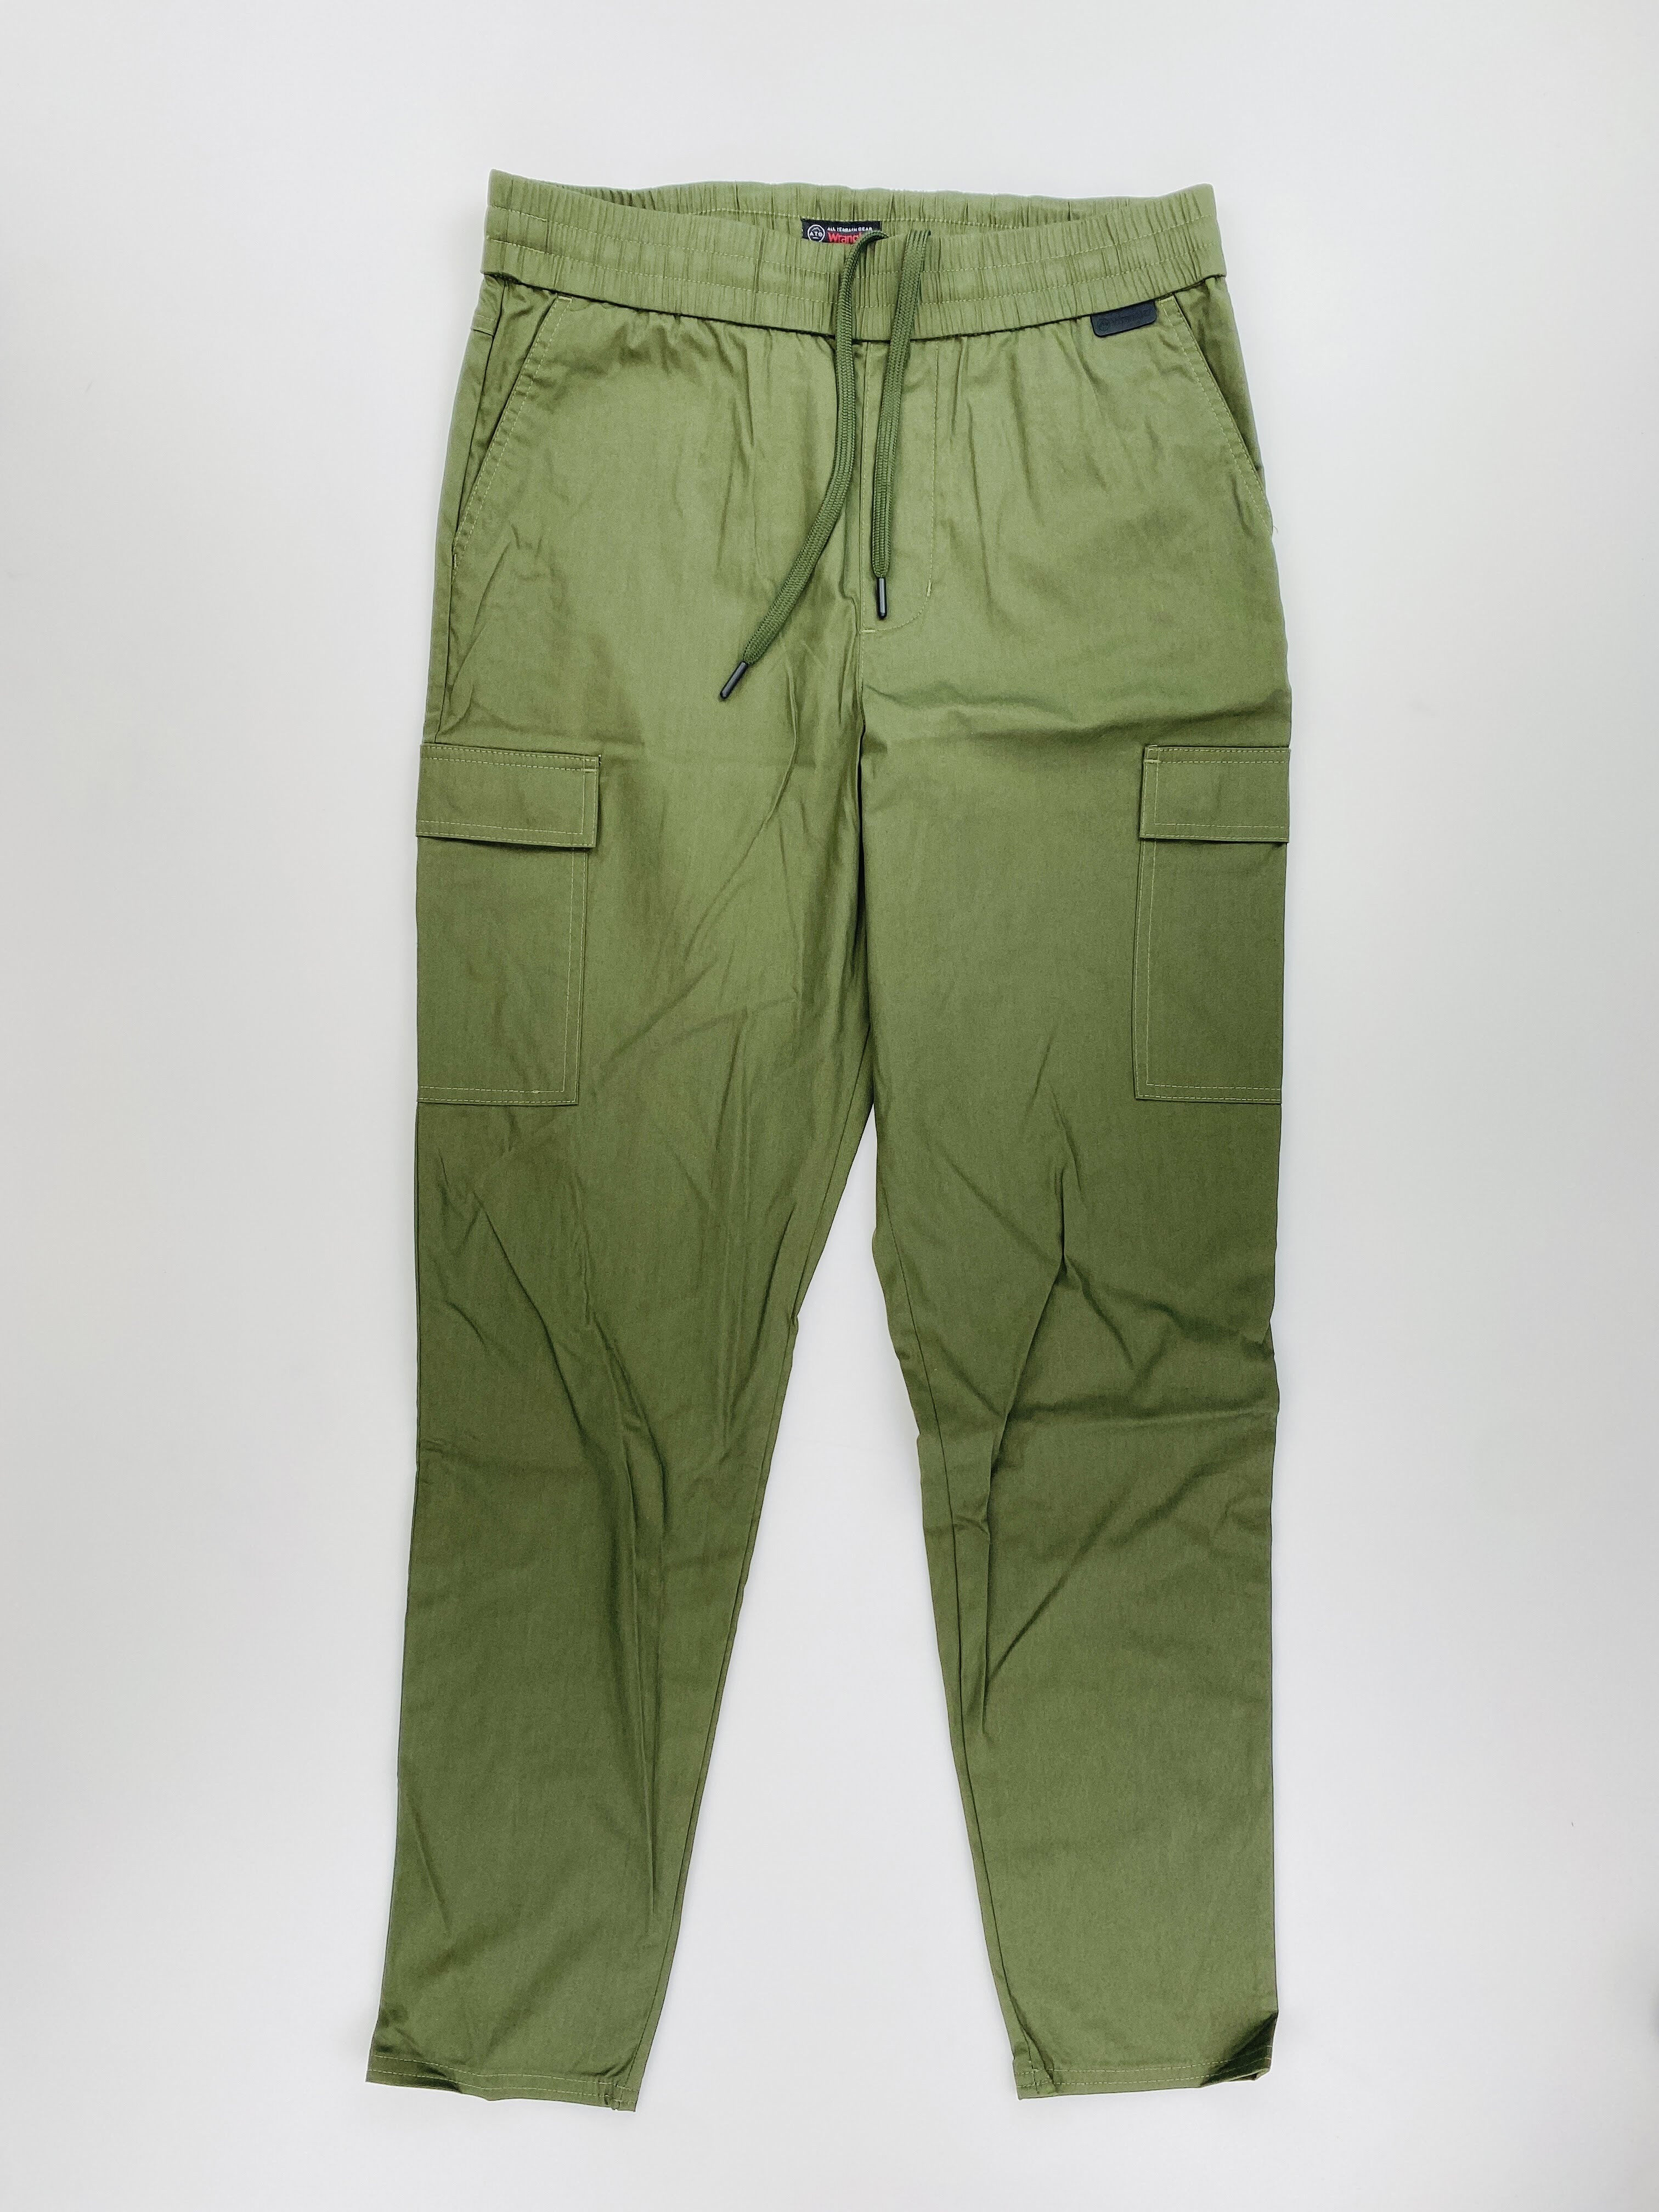 Wrangler Cargo Jogger - Second Hand Walking trousers - Women's - Vert olive - US 28 | Hardloop